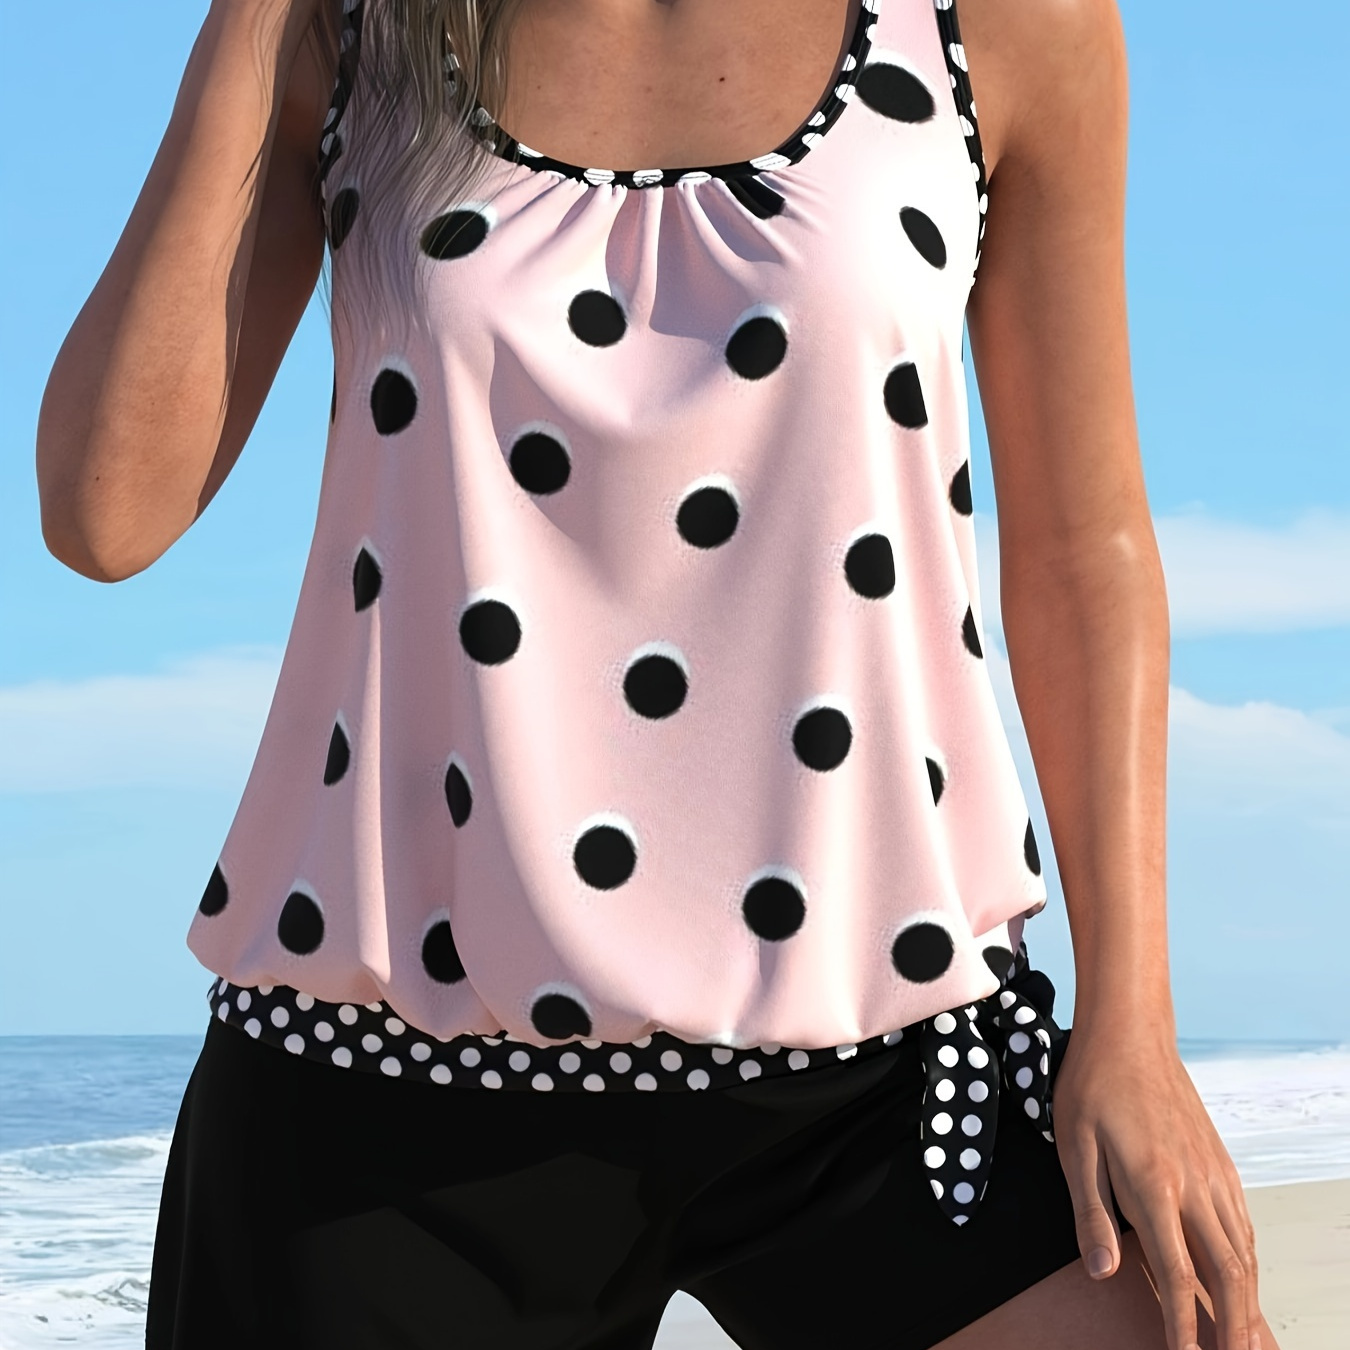 

Women's Polka Dot Tankini Swim Top & Shorts 2 Piece Set, Pinkish & Black, Beachwear, Sleeveless, Casual Summer Swimming Outfit